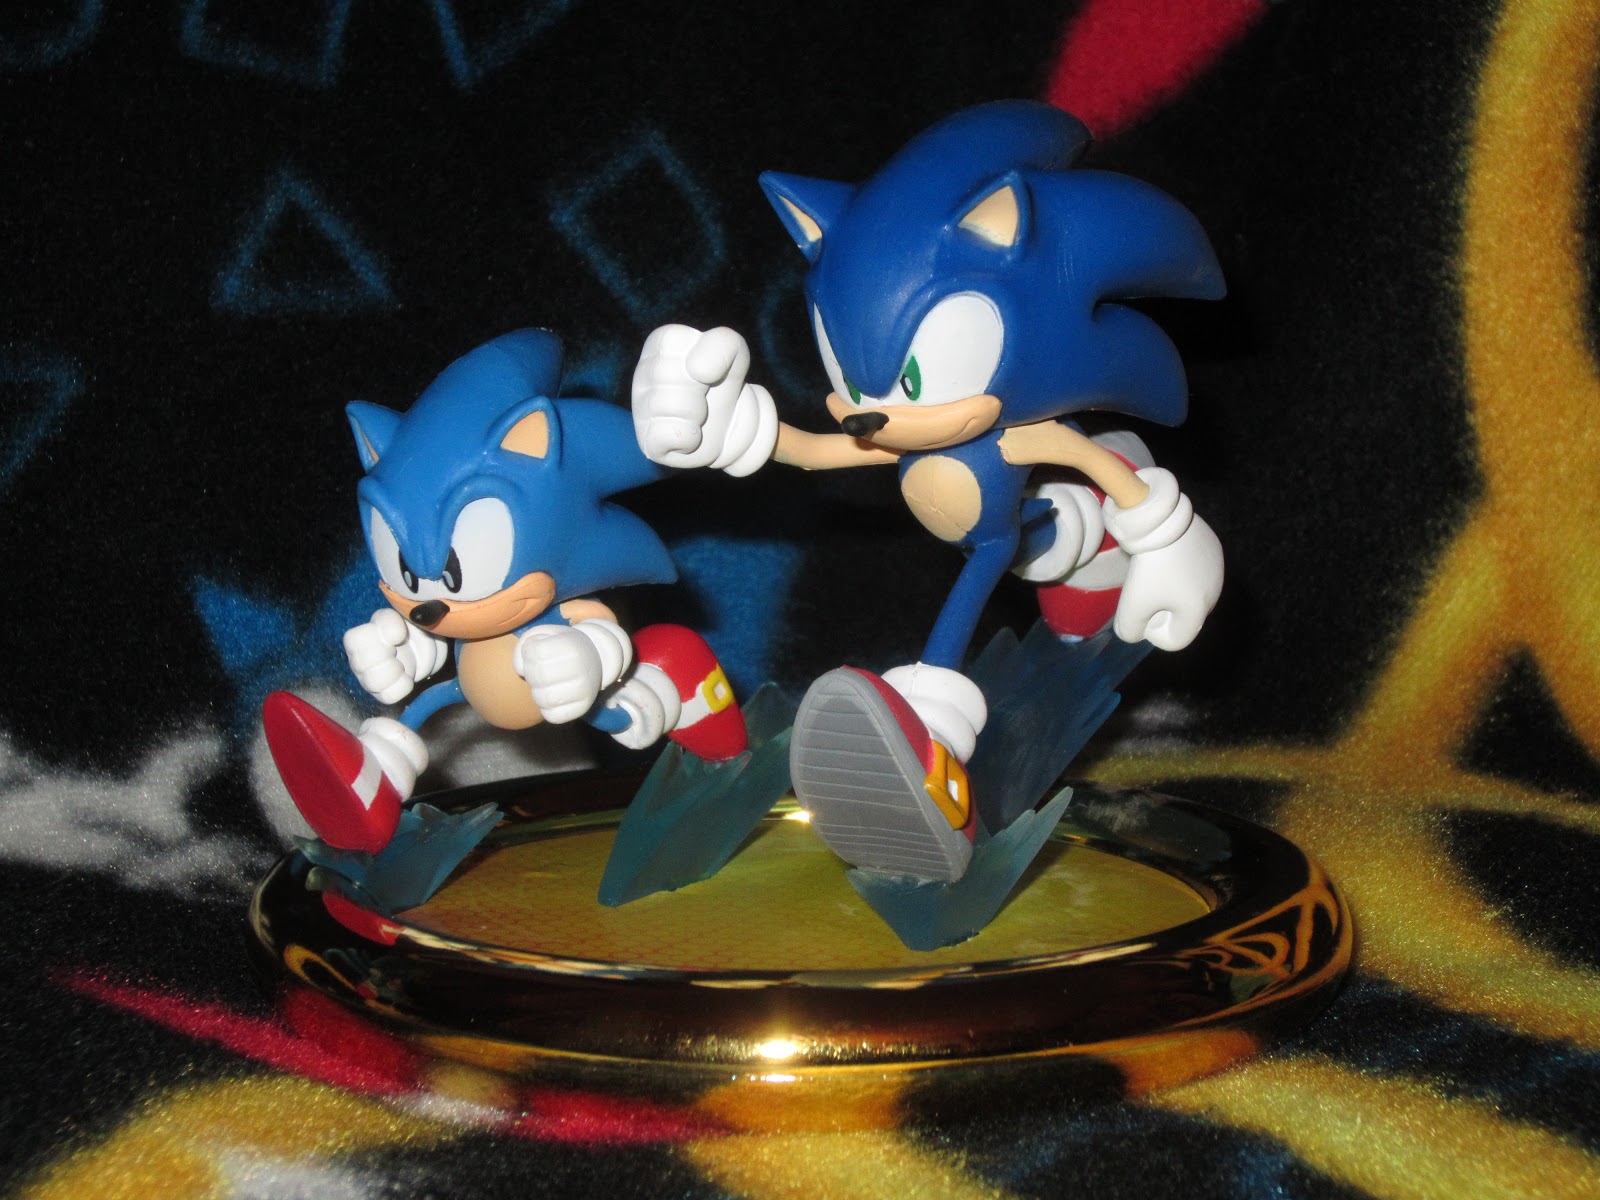 Jazwares Sonic The Hedgehog Generations Statue Action Figure for sale online